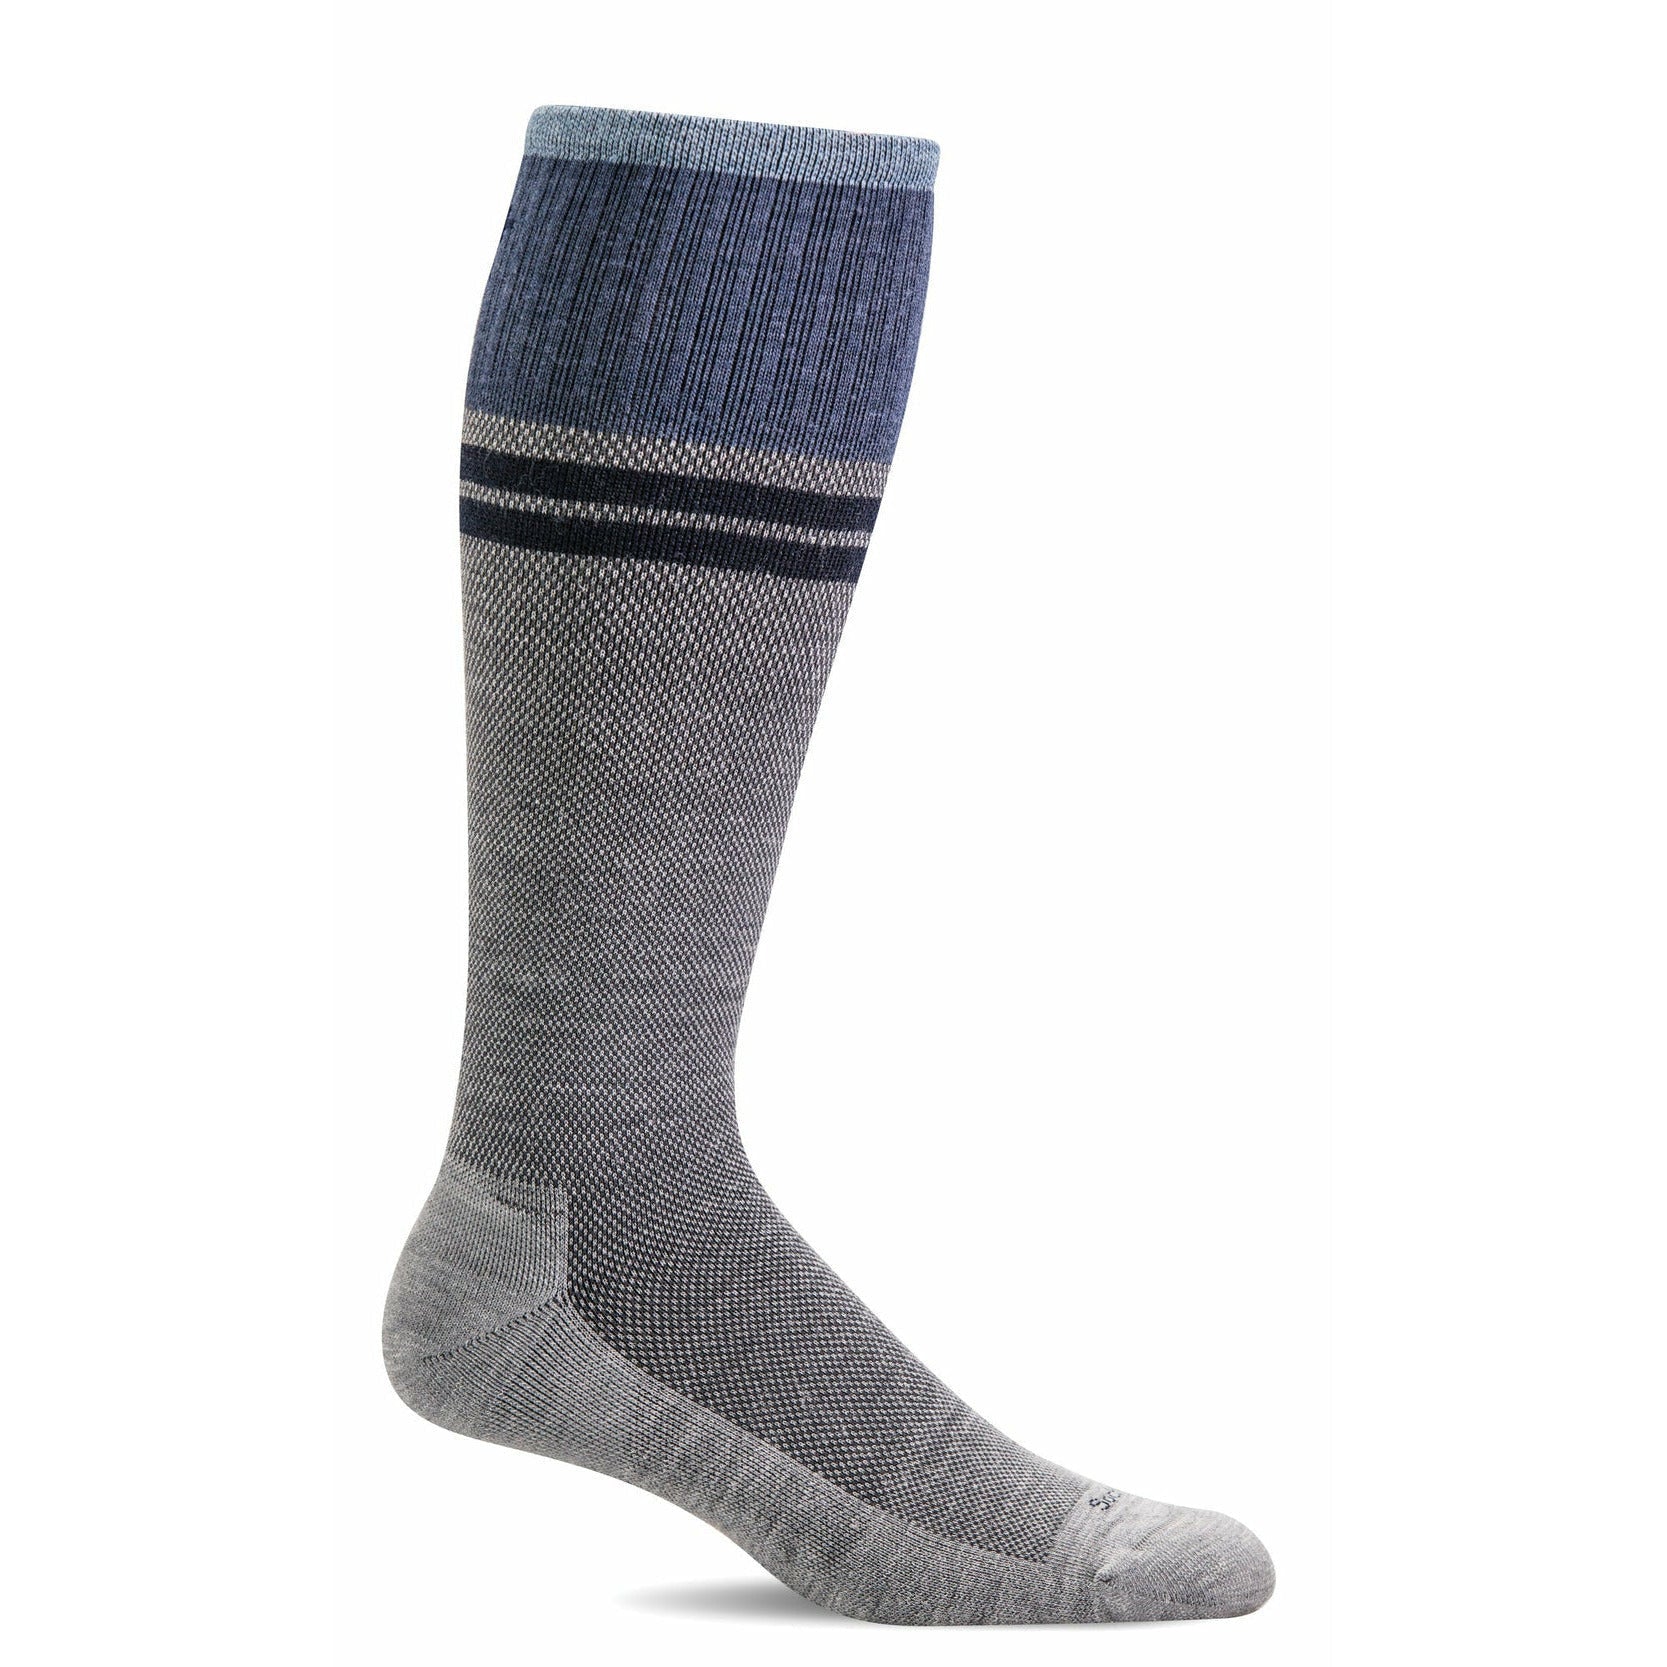 Men's Sportster Moderate Graduated Compression Socks